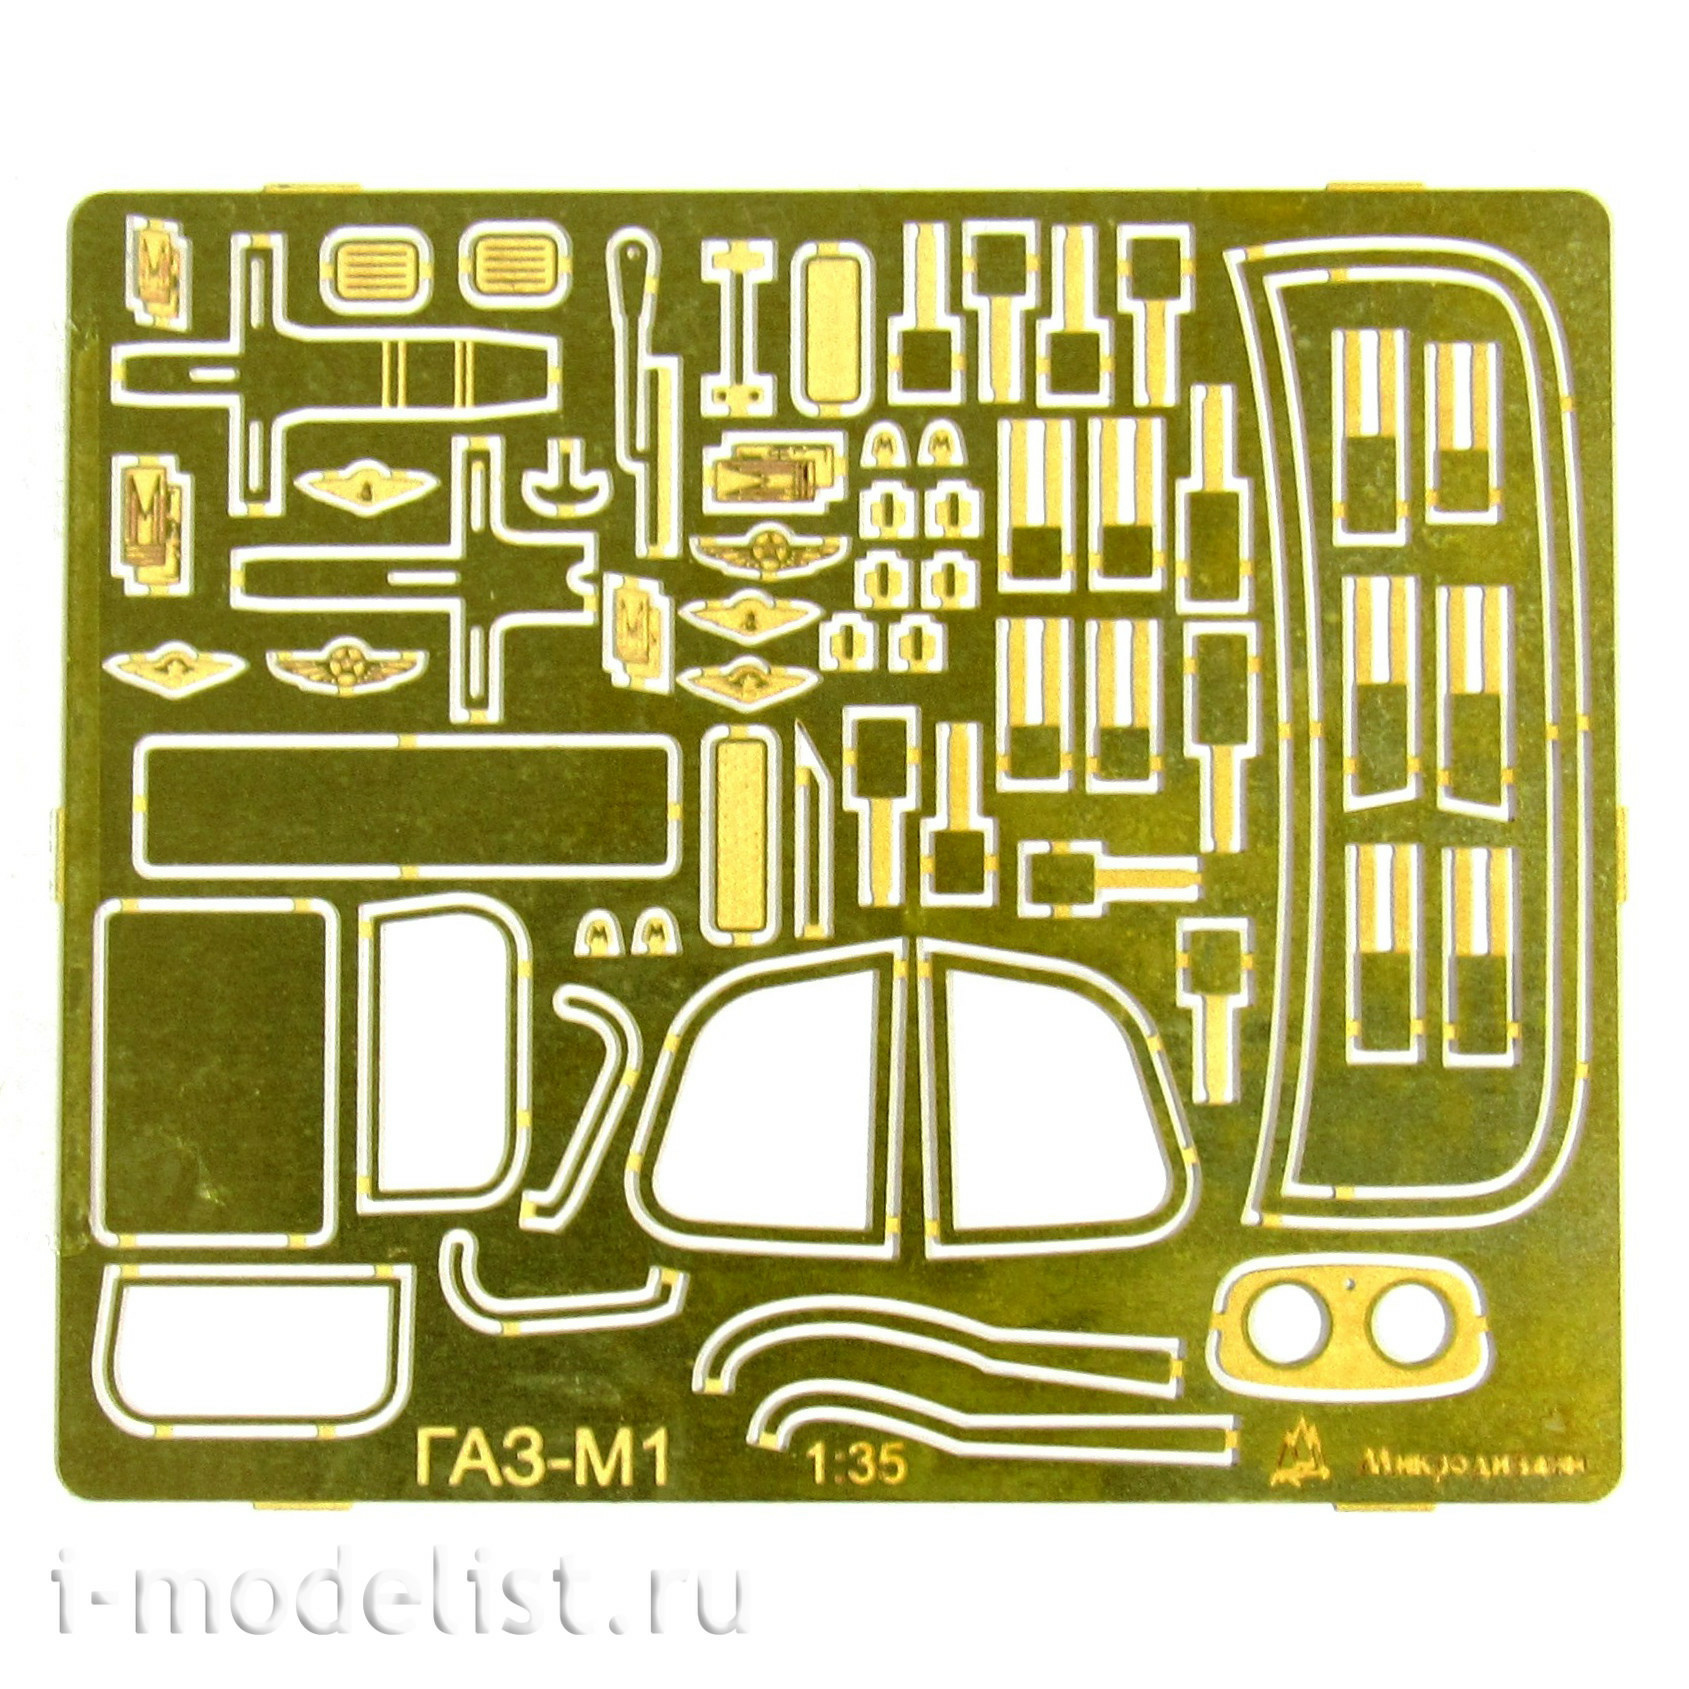 035207 Microdesign 1/35 detailing Set for Car - M1 (Basic set)